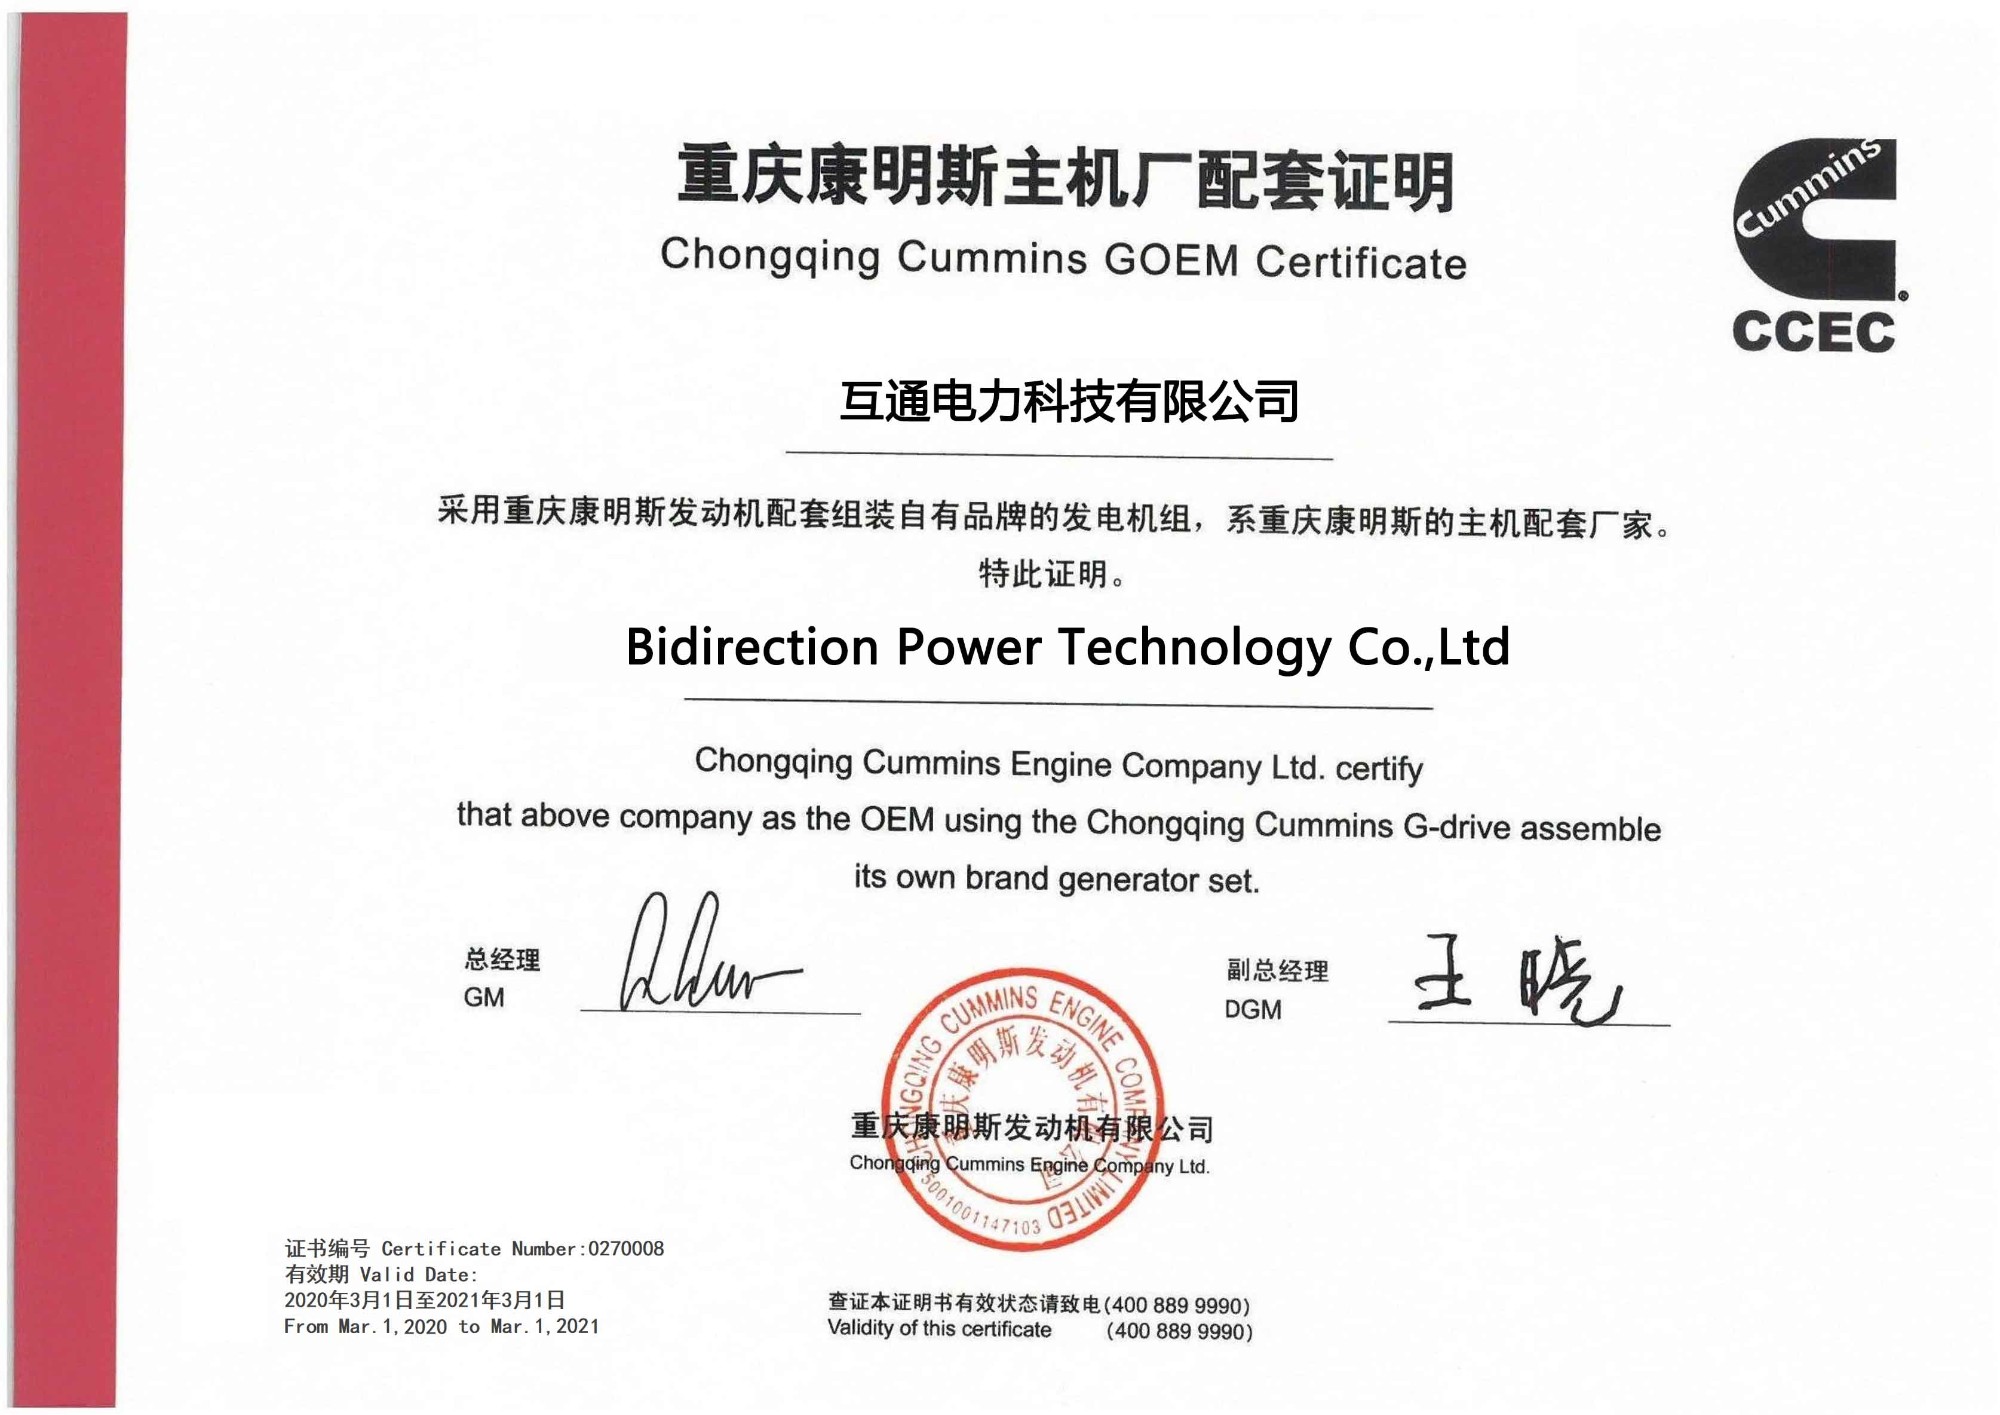 Bidirection Power Technology Co.,Ltd Authorised by Chongqing Cummins GOEM Certificate